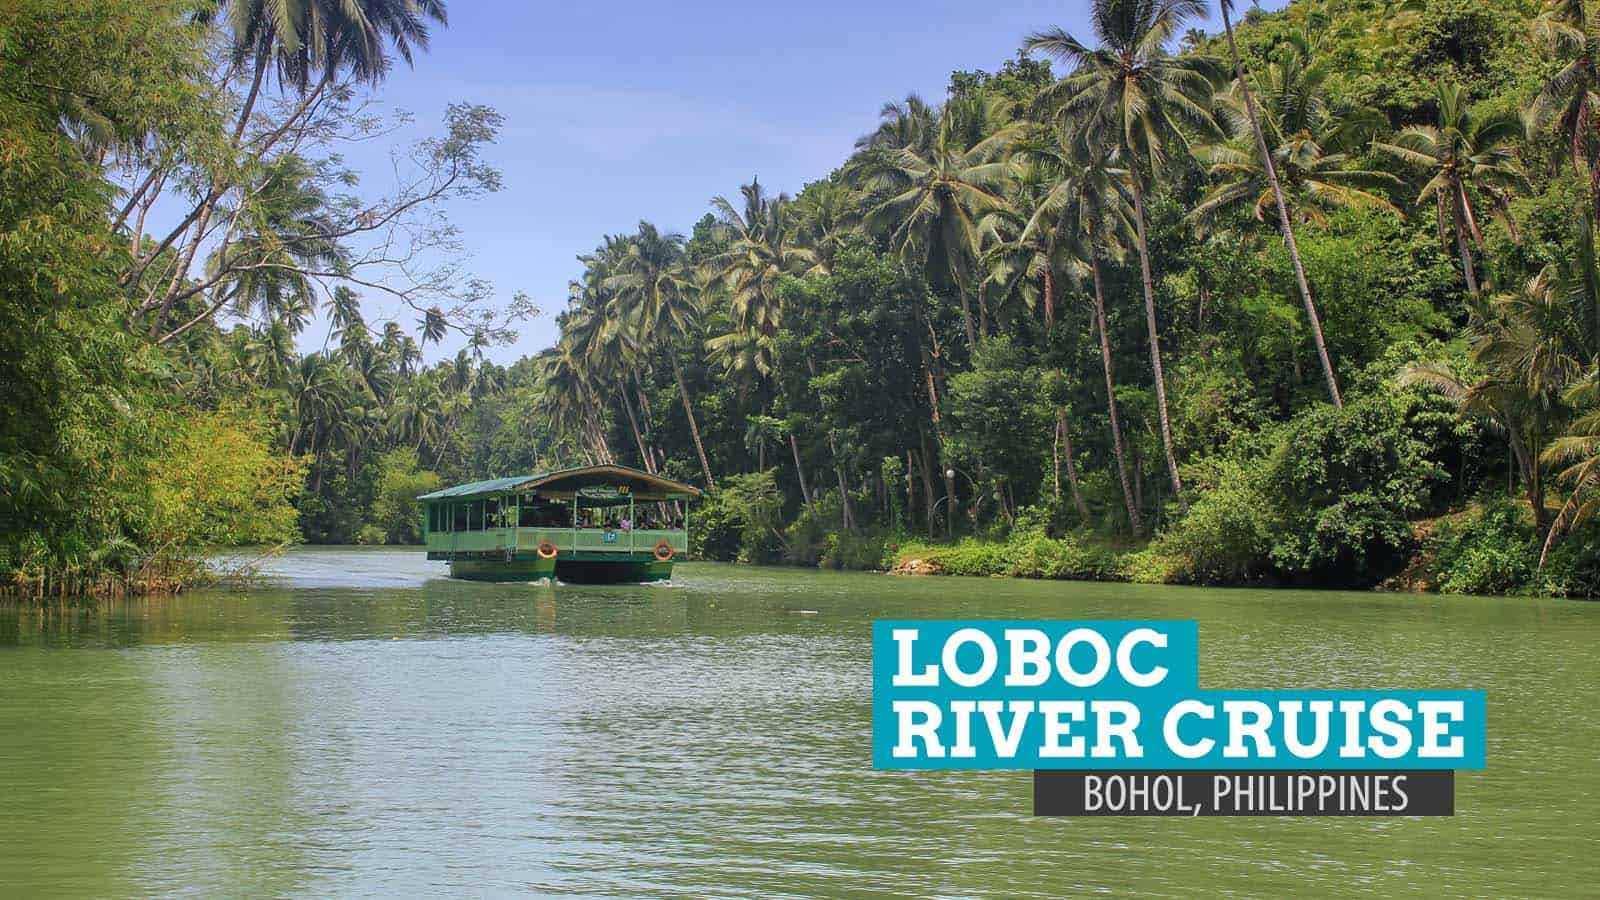 Loboc River Cruise, Bohol: Peculiar Bridge and Lunch Binge